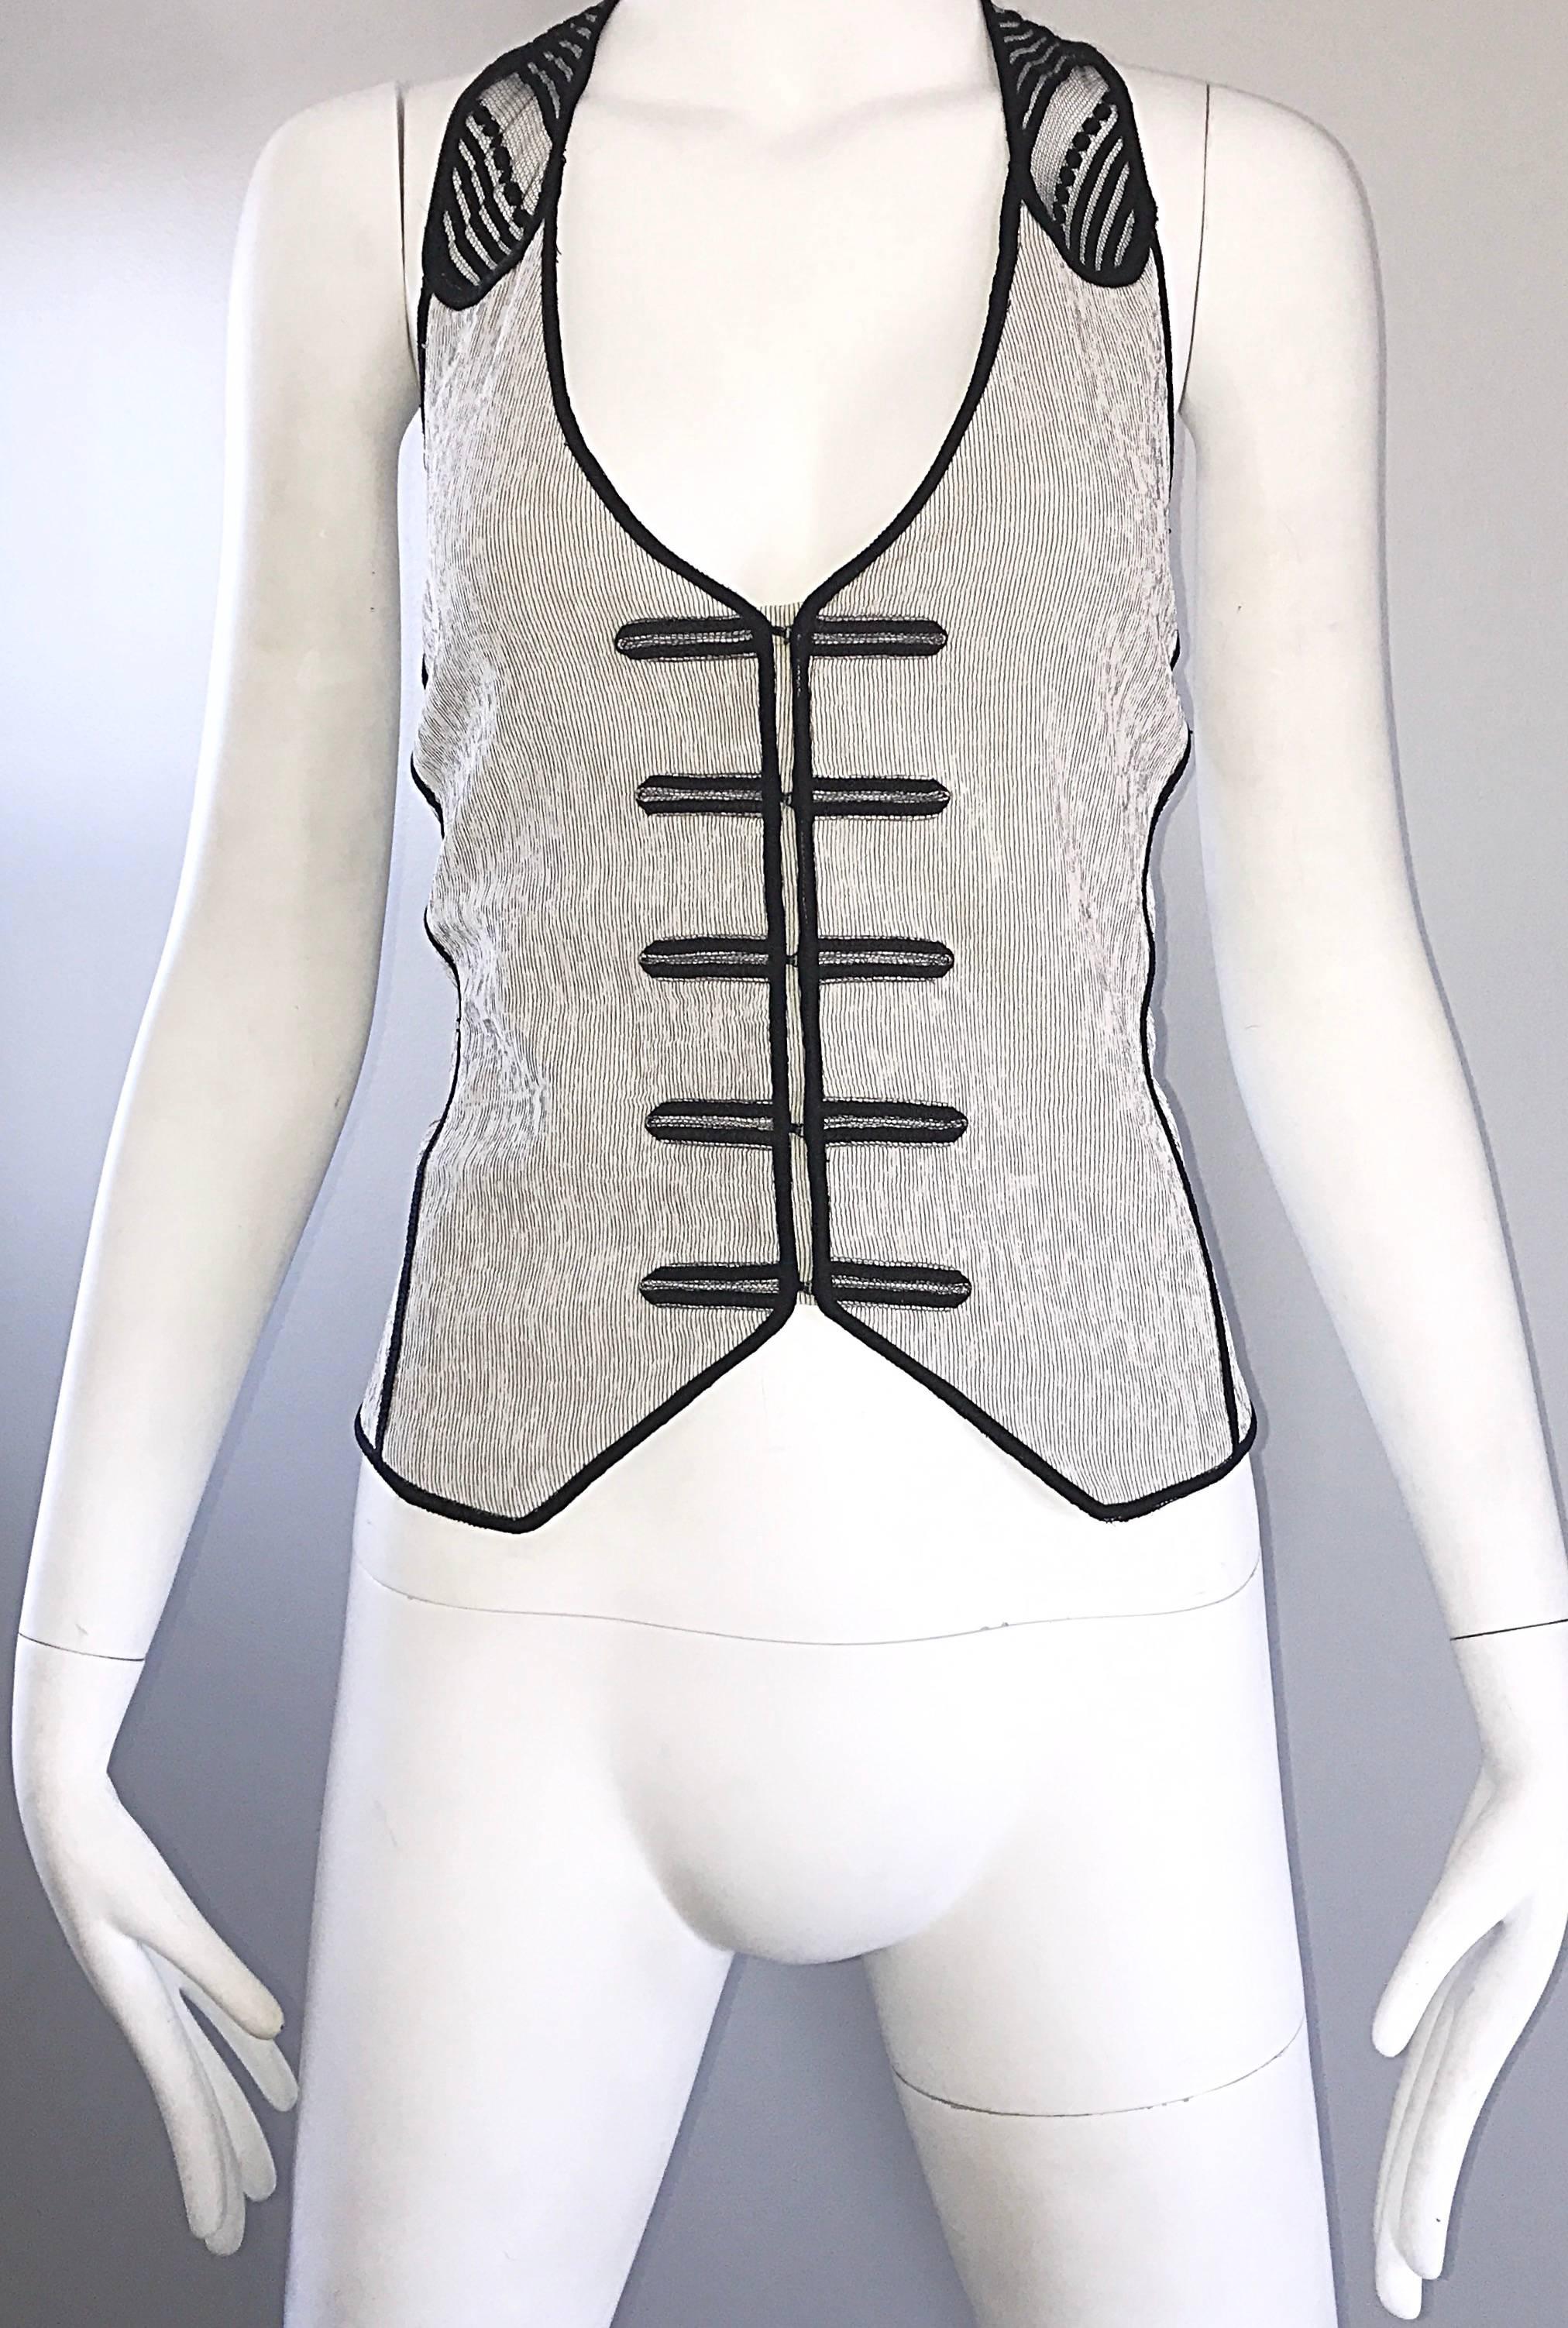 Women's 2000s Richard Chai Black and White Military Bondage Inspired Waistcoat Vest Top For Sale